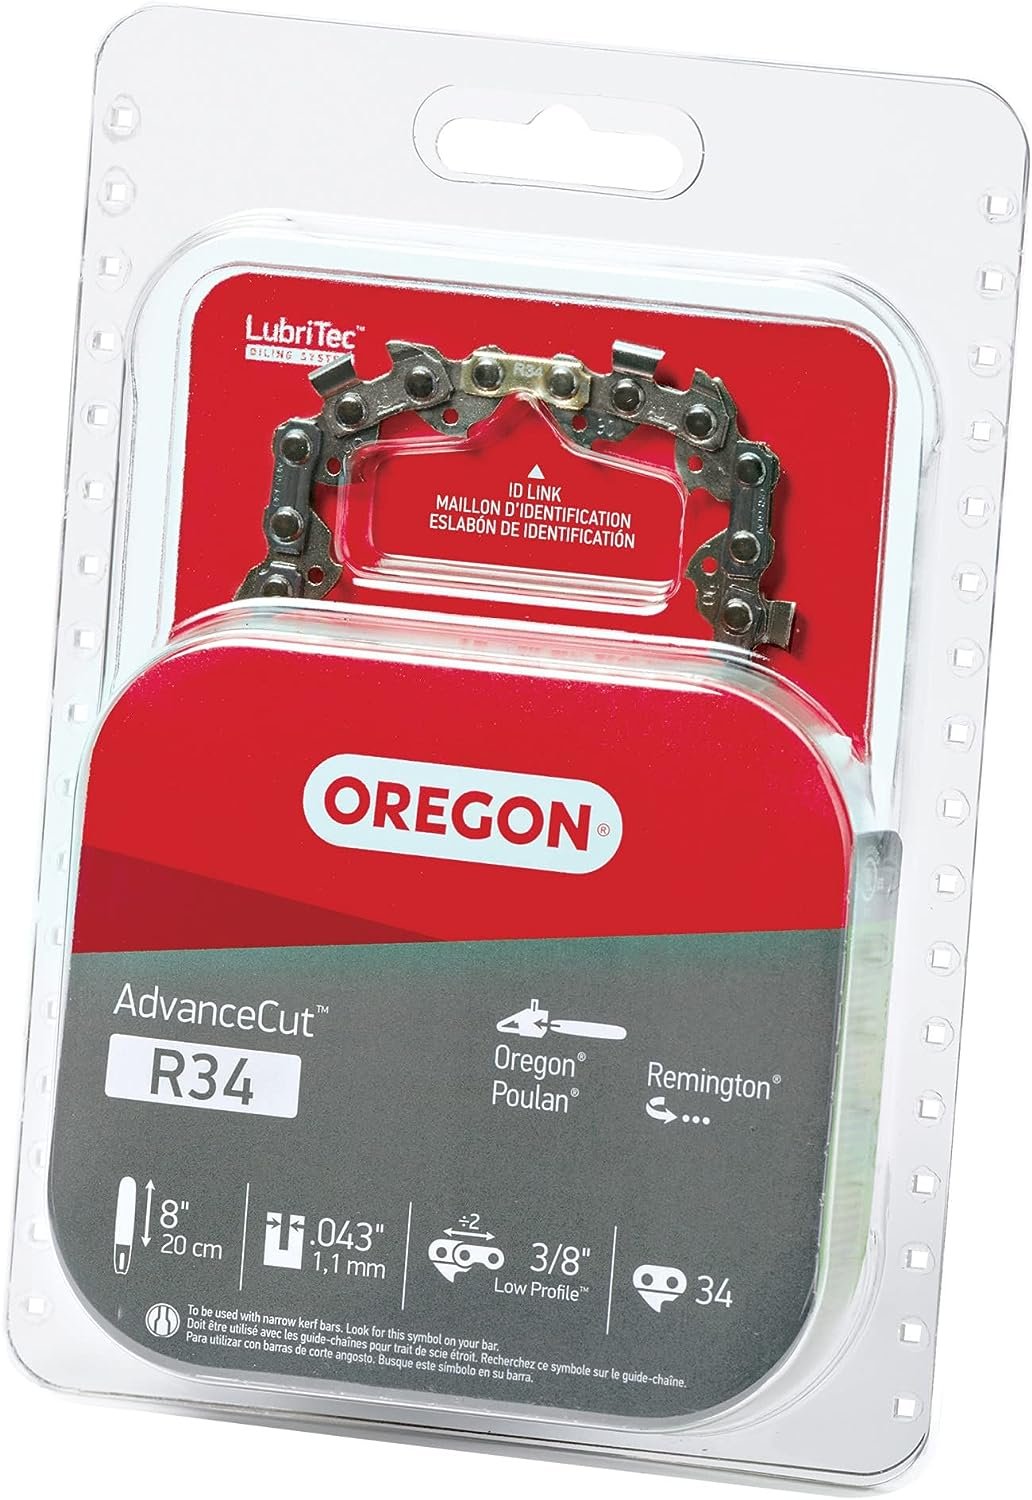 Oregon PS250 Pole Saw review